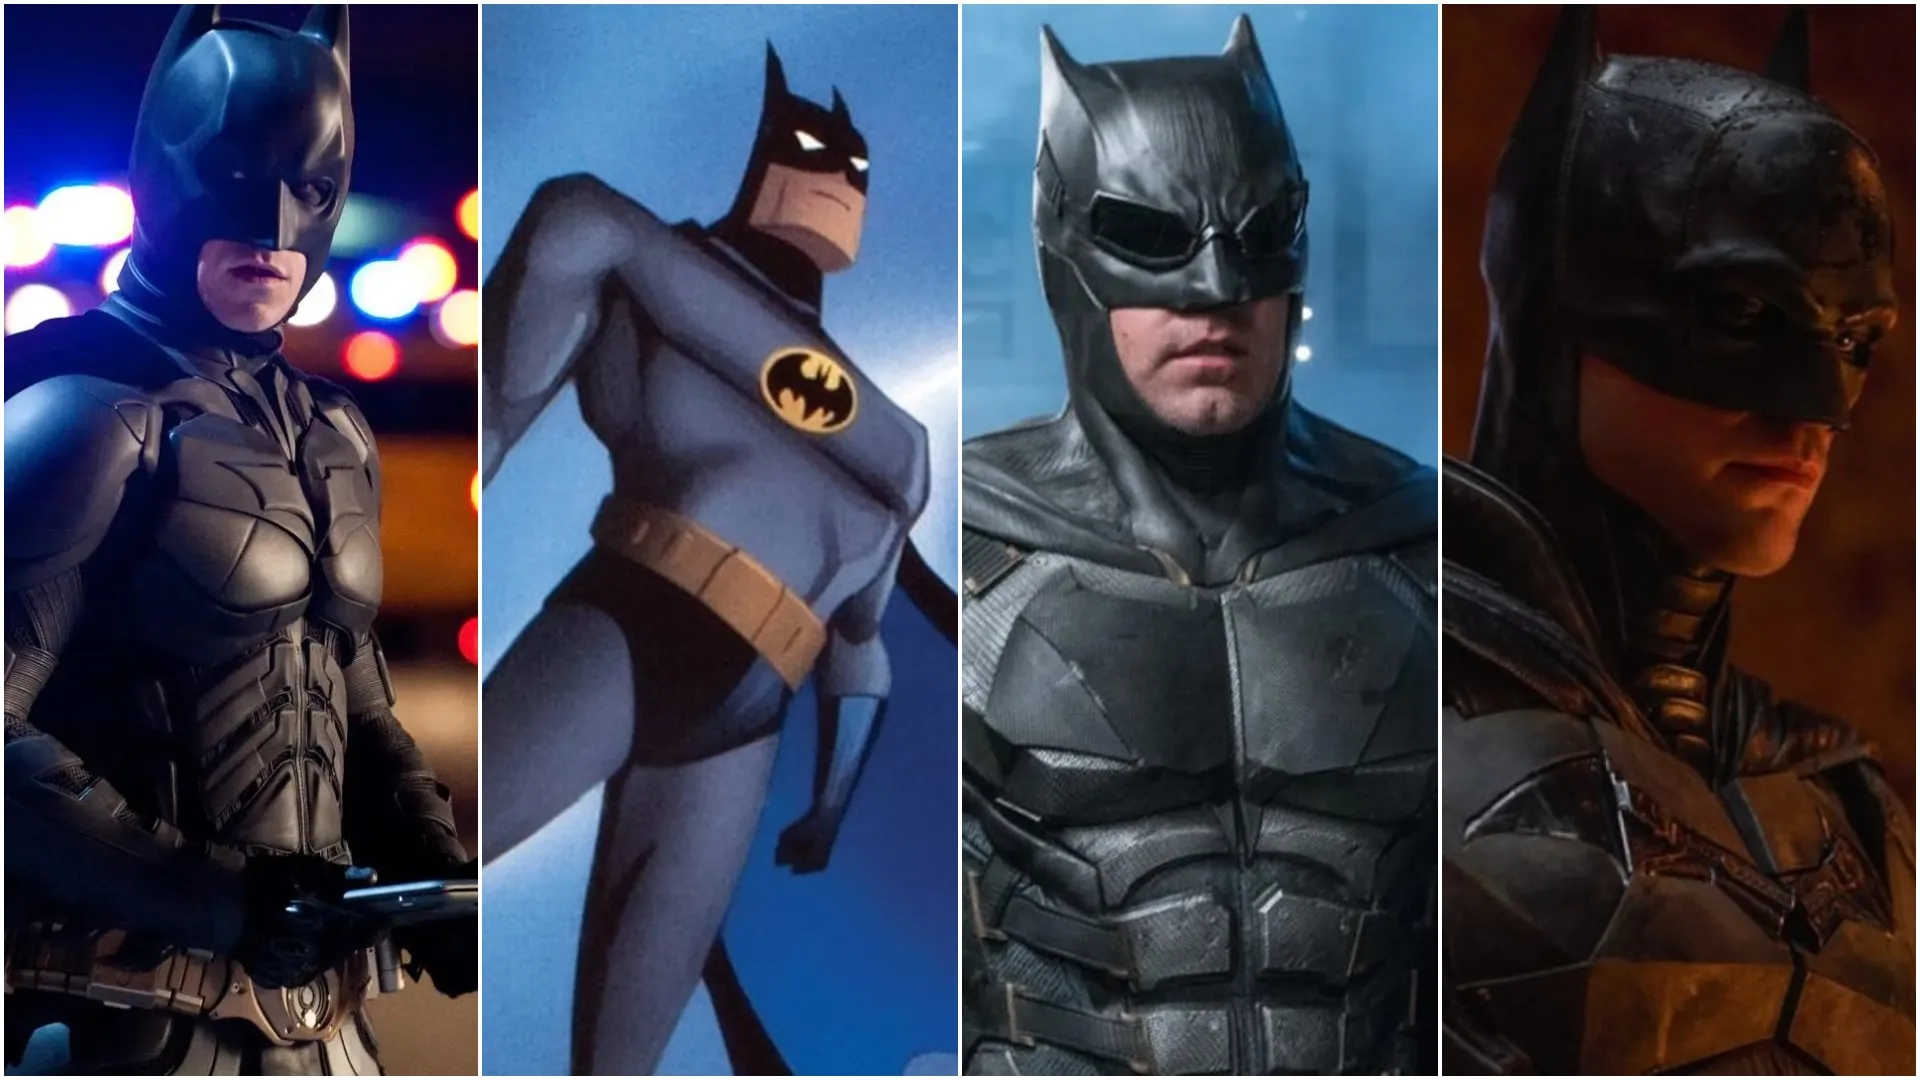 Other Notable Batman Portrayals